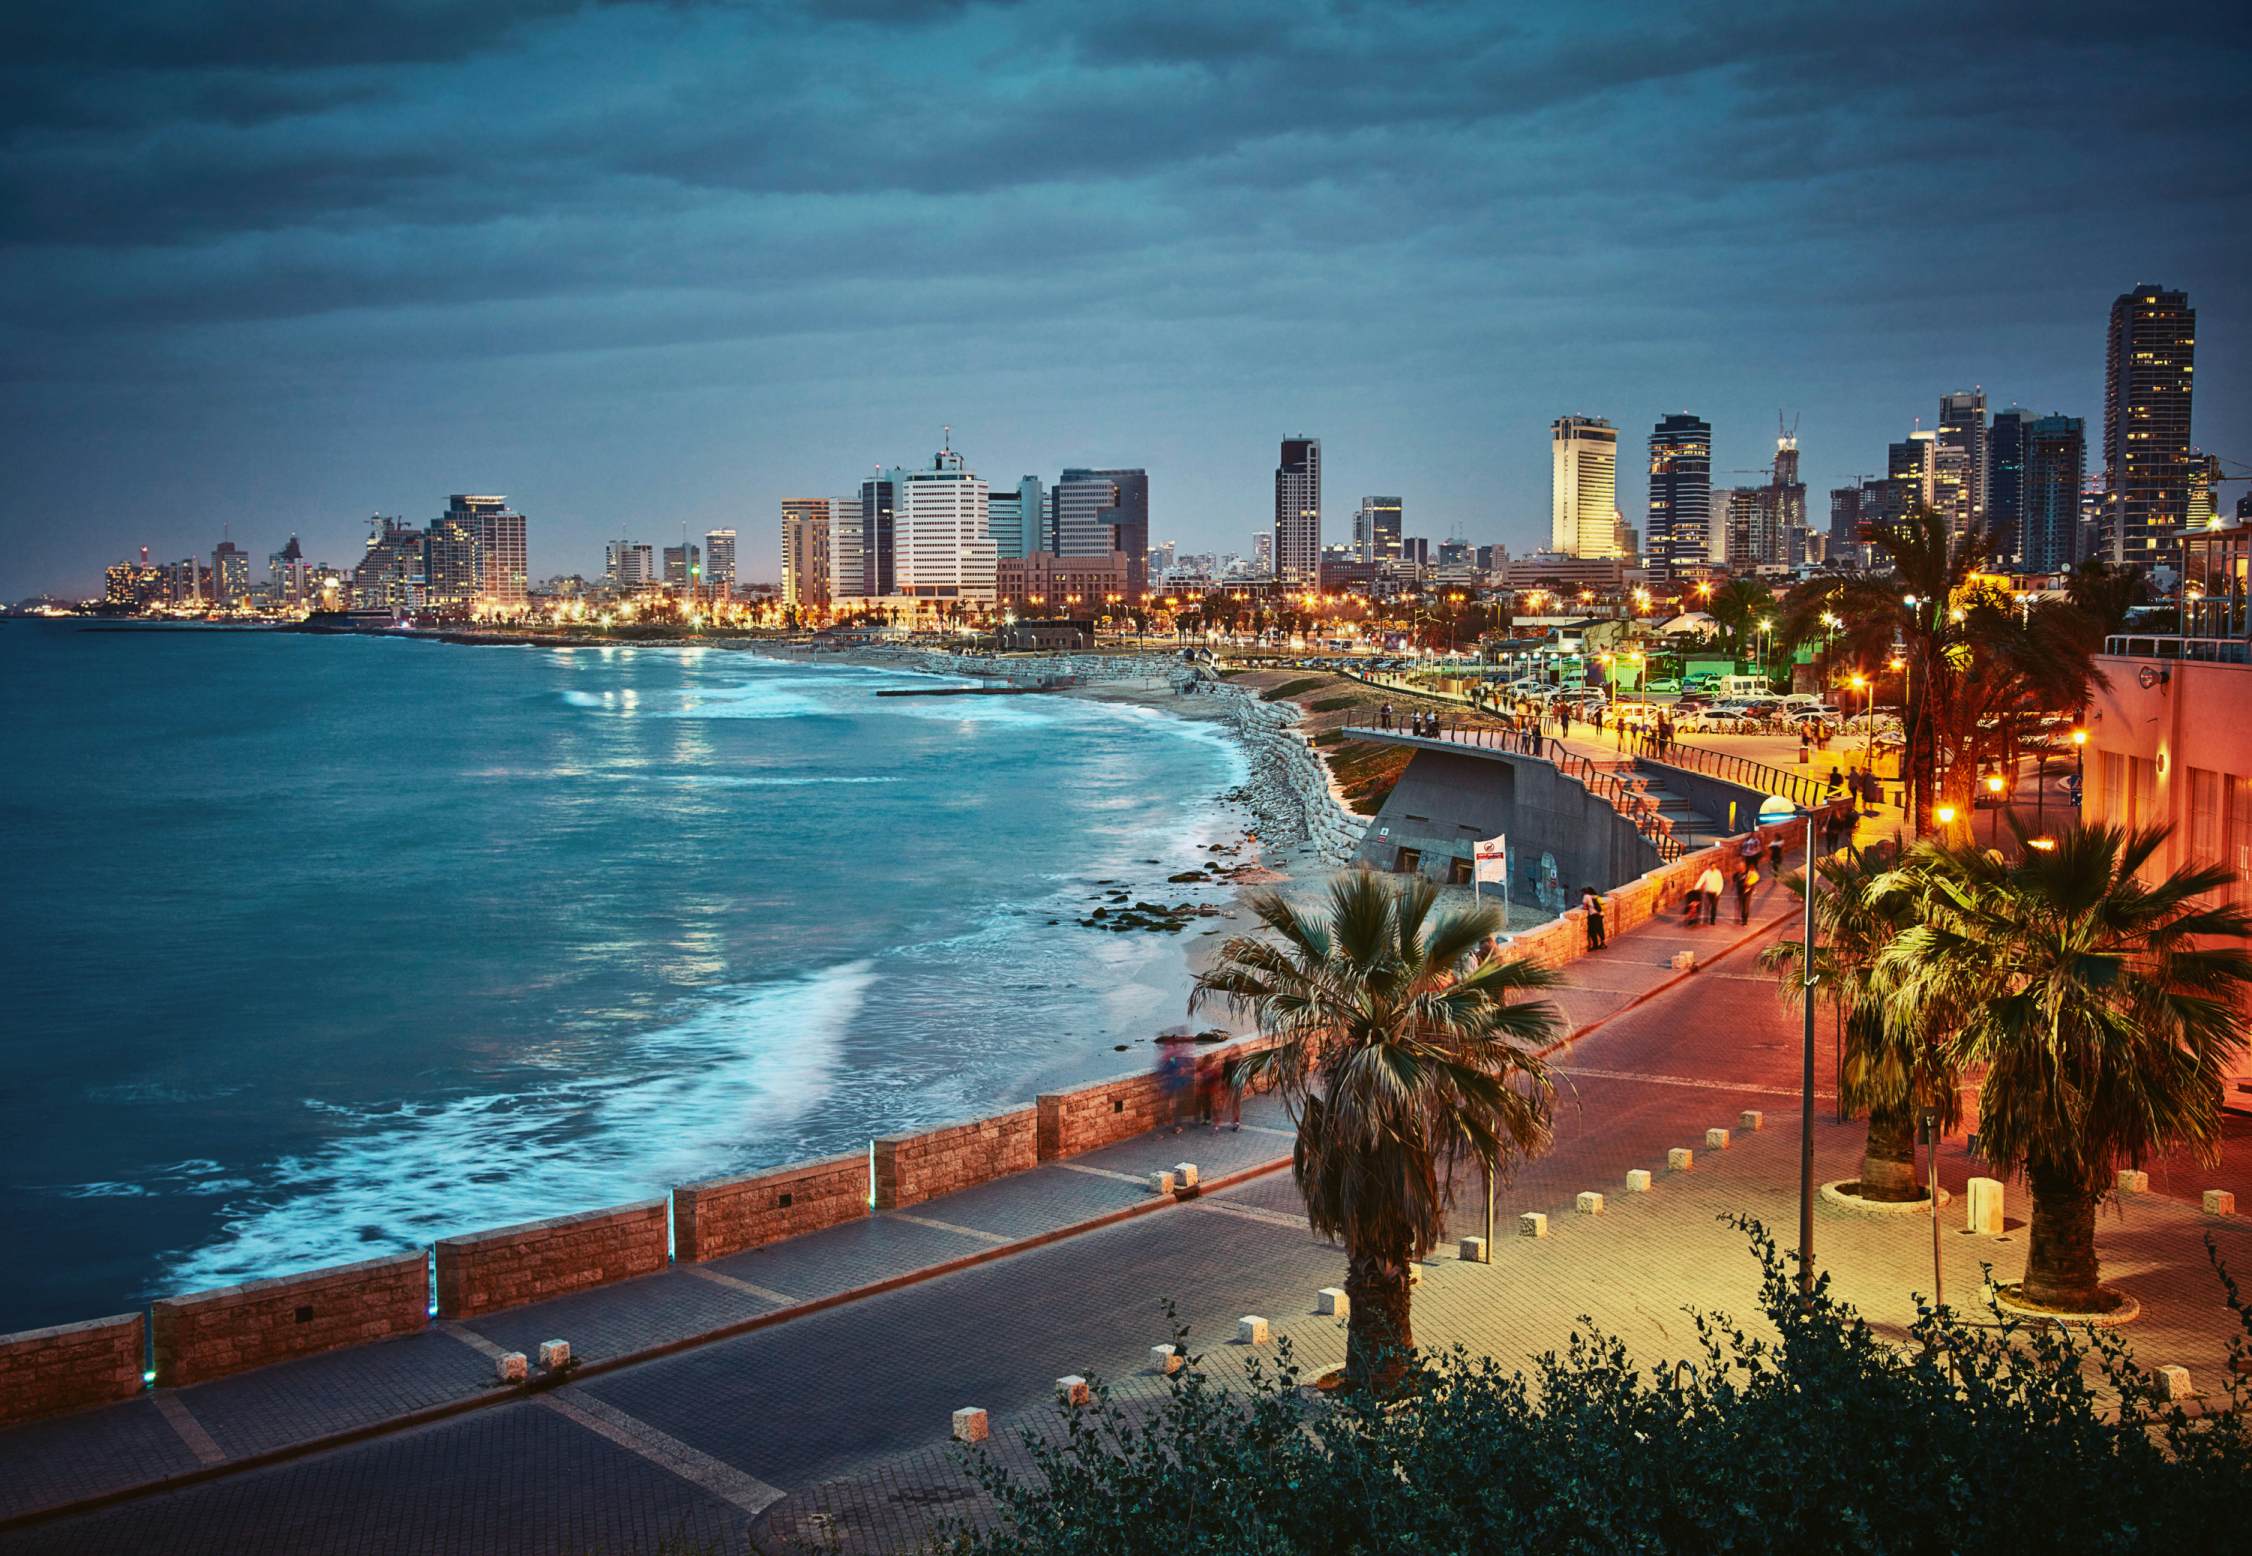 Tel Aviv travel | Israel, Middle East - Lonely Planet